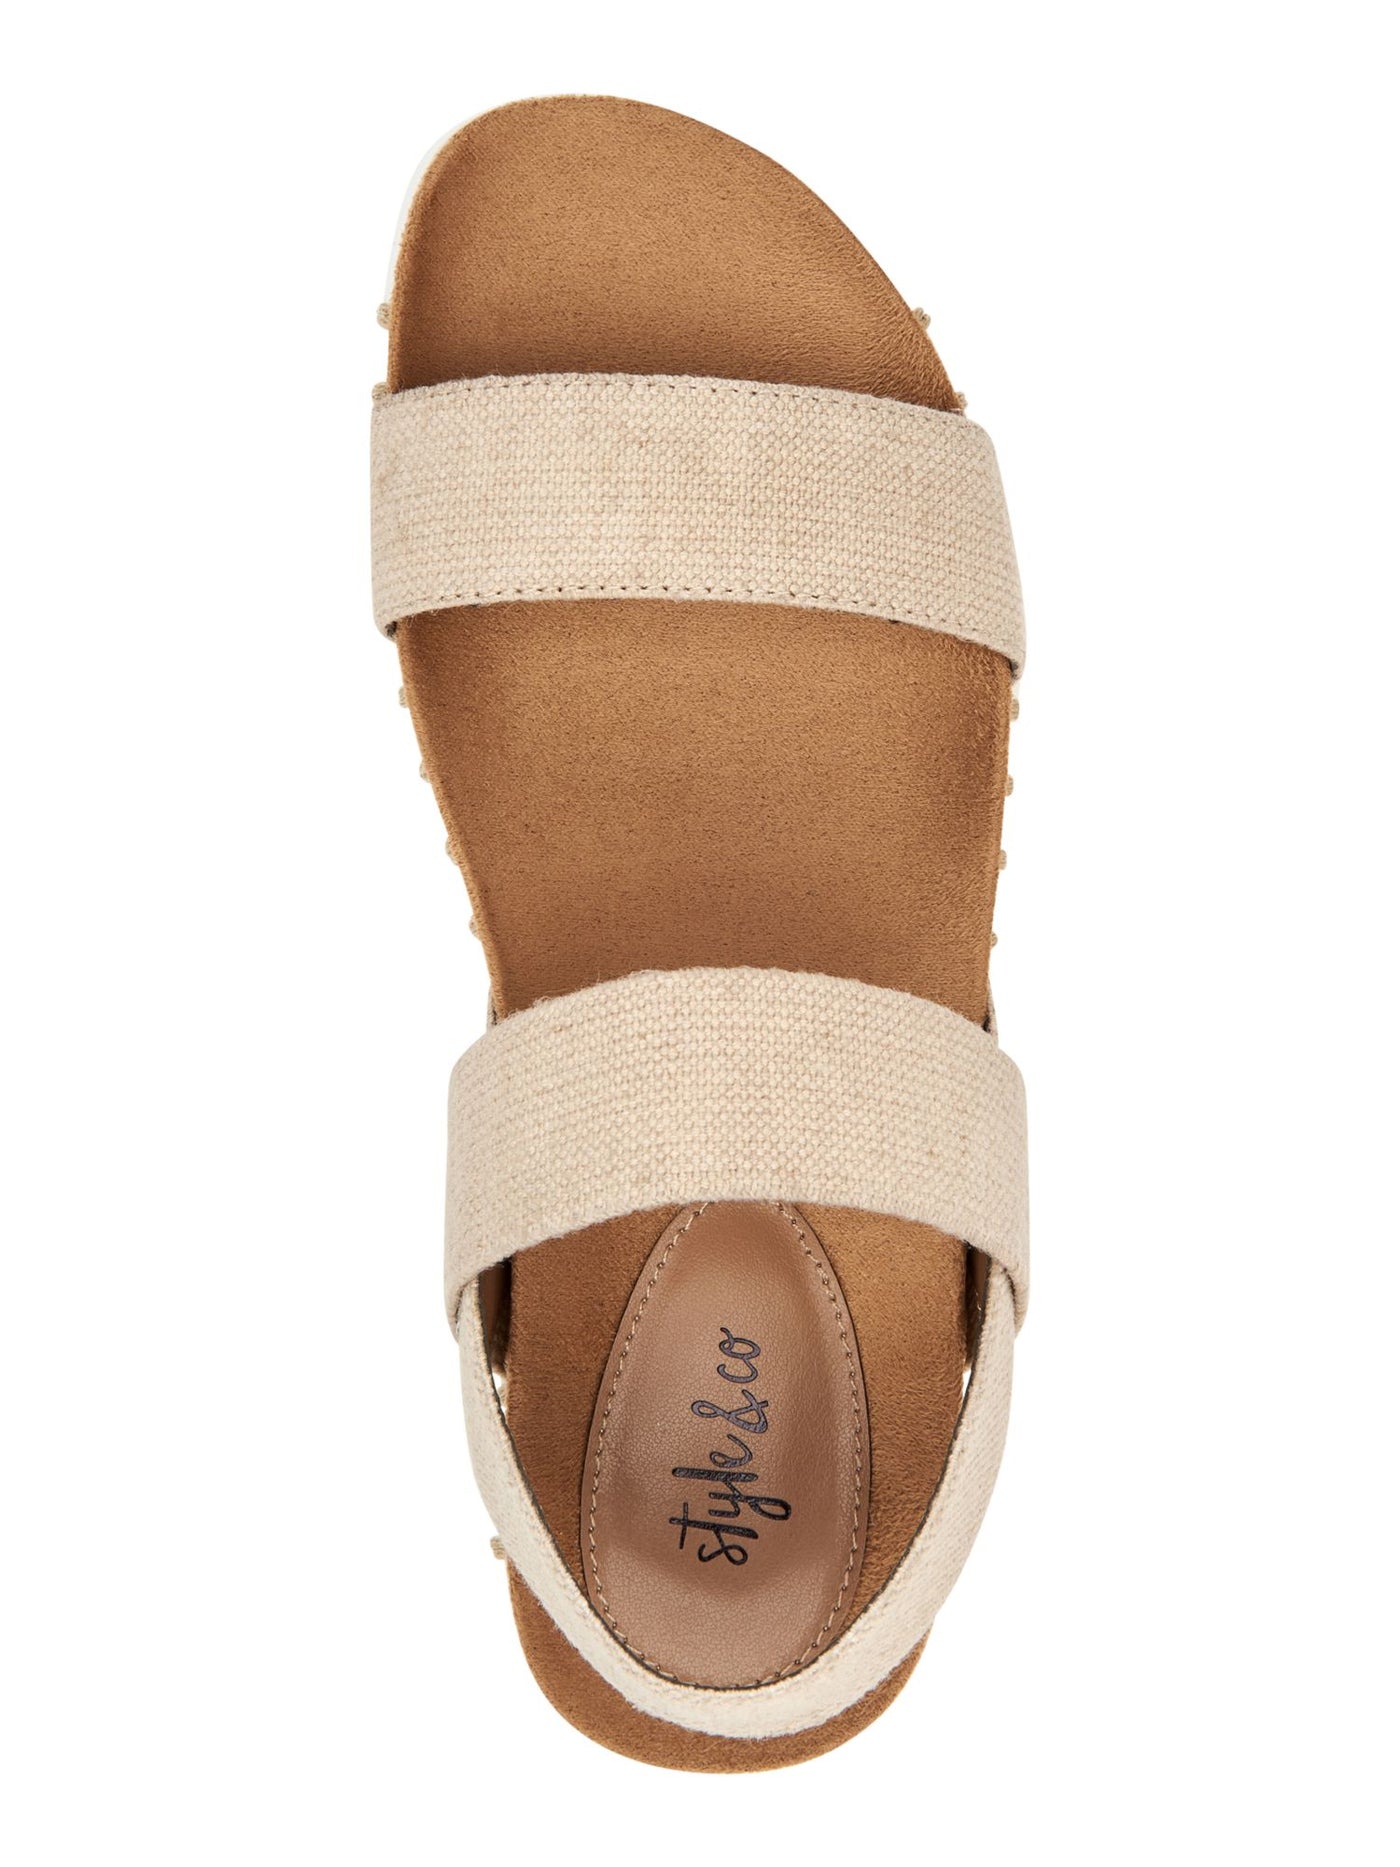 STYLE & COMPANY Womens Beige 1" Platform Stretch Comfort Milaa Round Toe Wedge Slip On Slingback Sandal 8.5 M